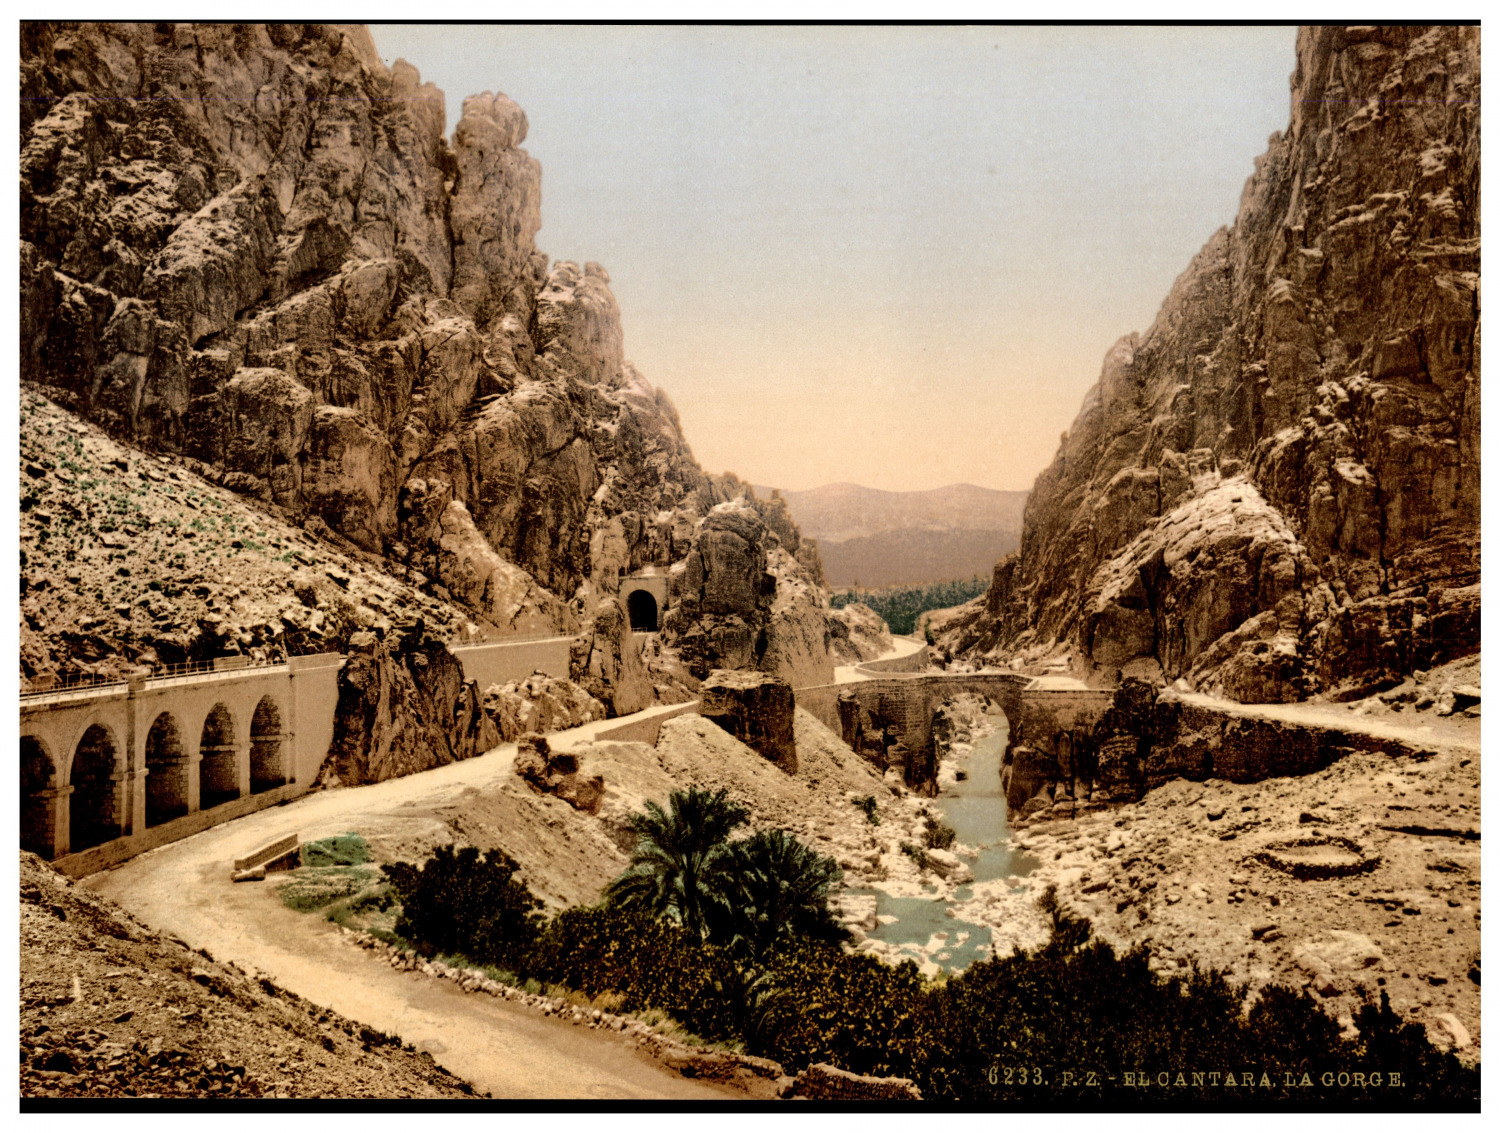 Algeria, El Kantara, La gorge III Vintage photochrome, photochromy, vintage